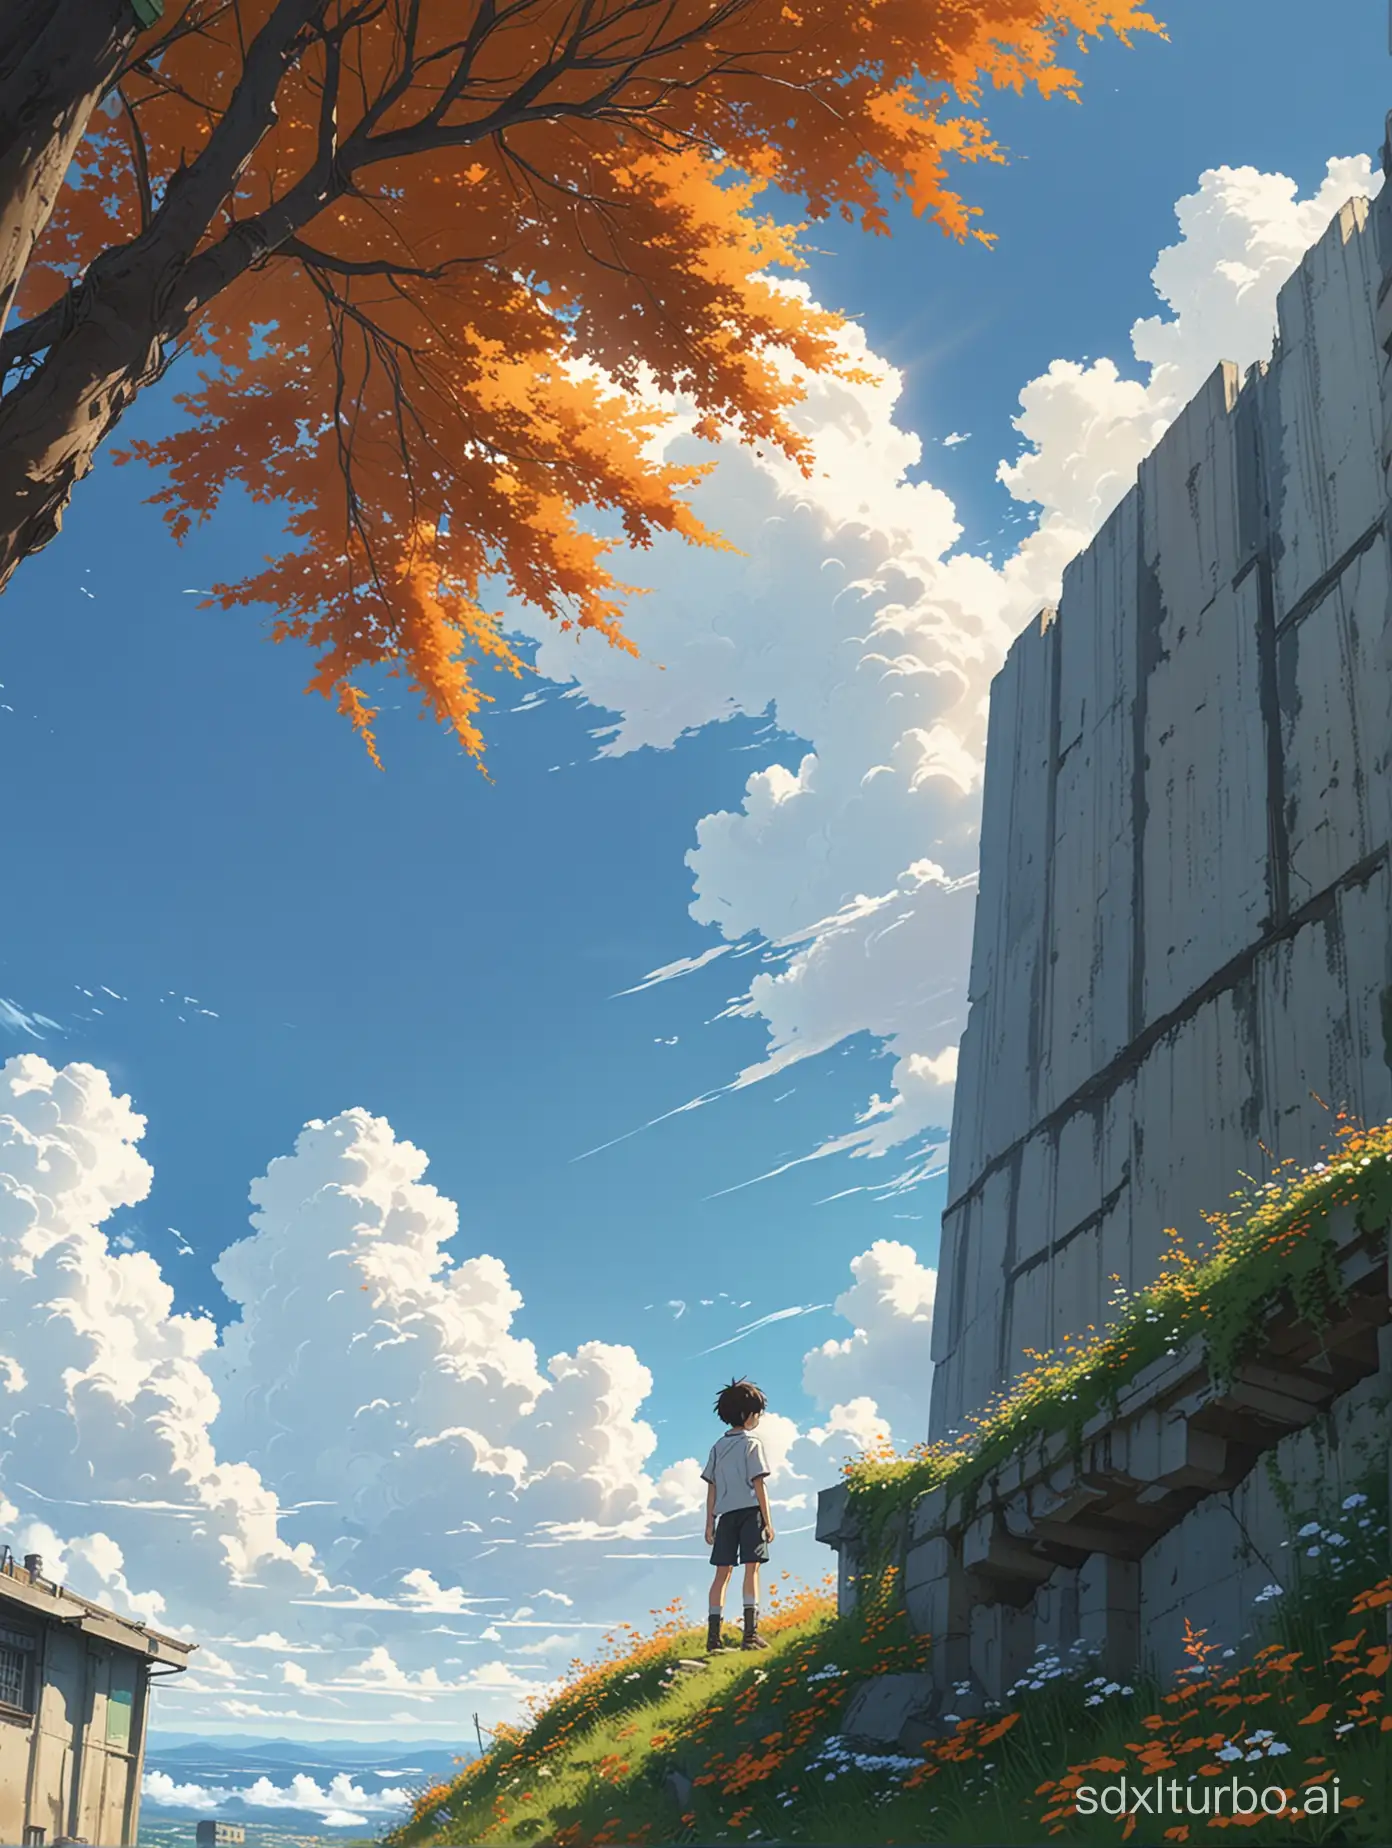 NatureReclaimed-Urban-Tower-Makoto-ShinkaiInspired-Anime-Scene-with-Boy-Amidst-Grass-and-Flowers